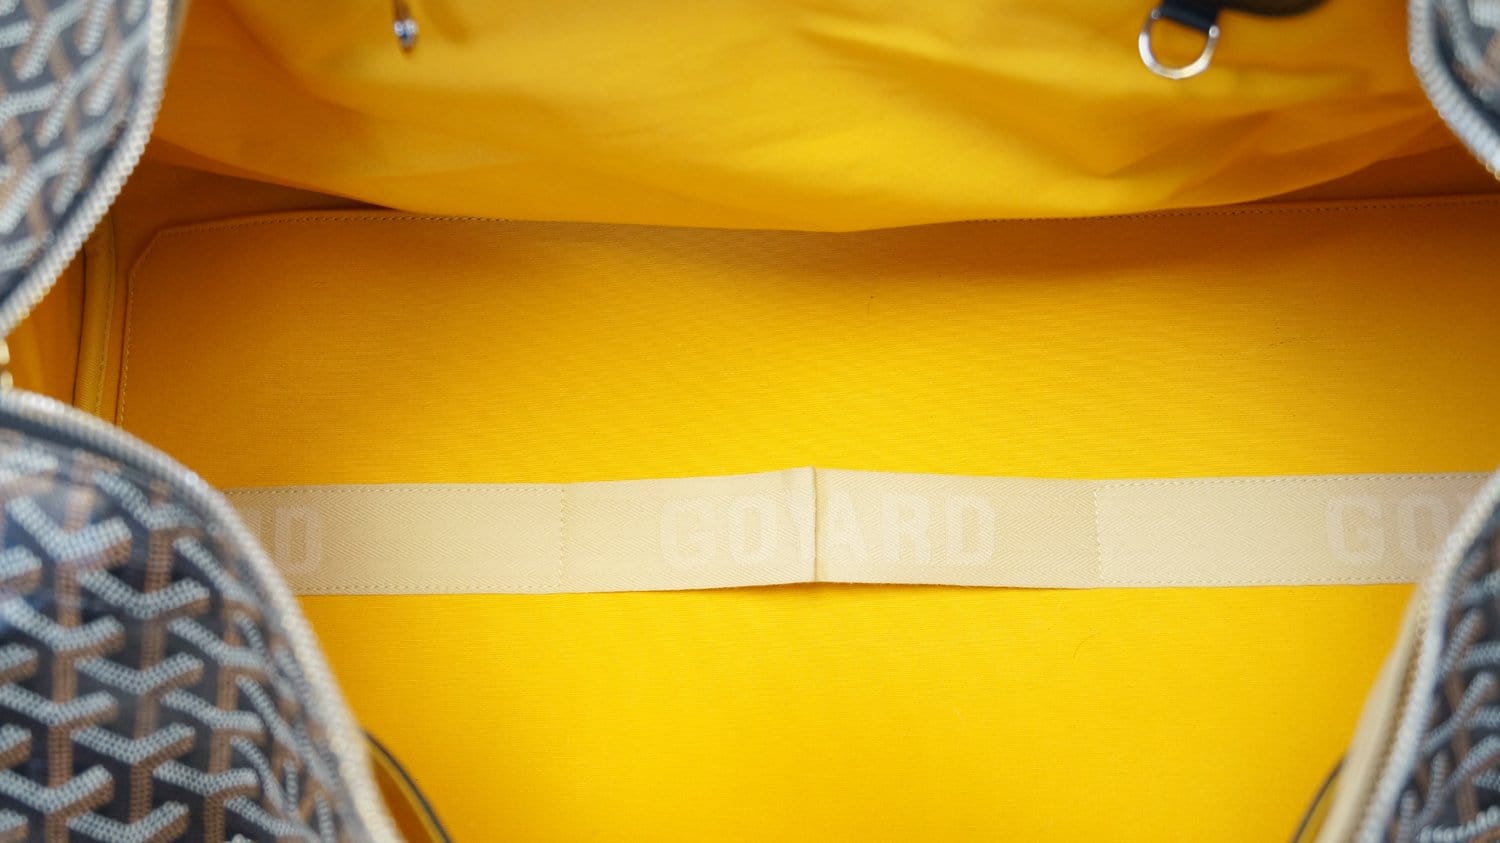 Goyard Croisiere 50cm Duffle Bag With Strap Black/Tan – The Luxury Shopper